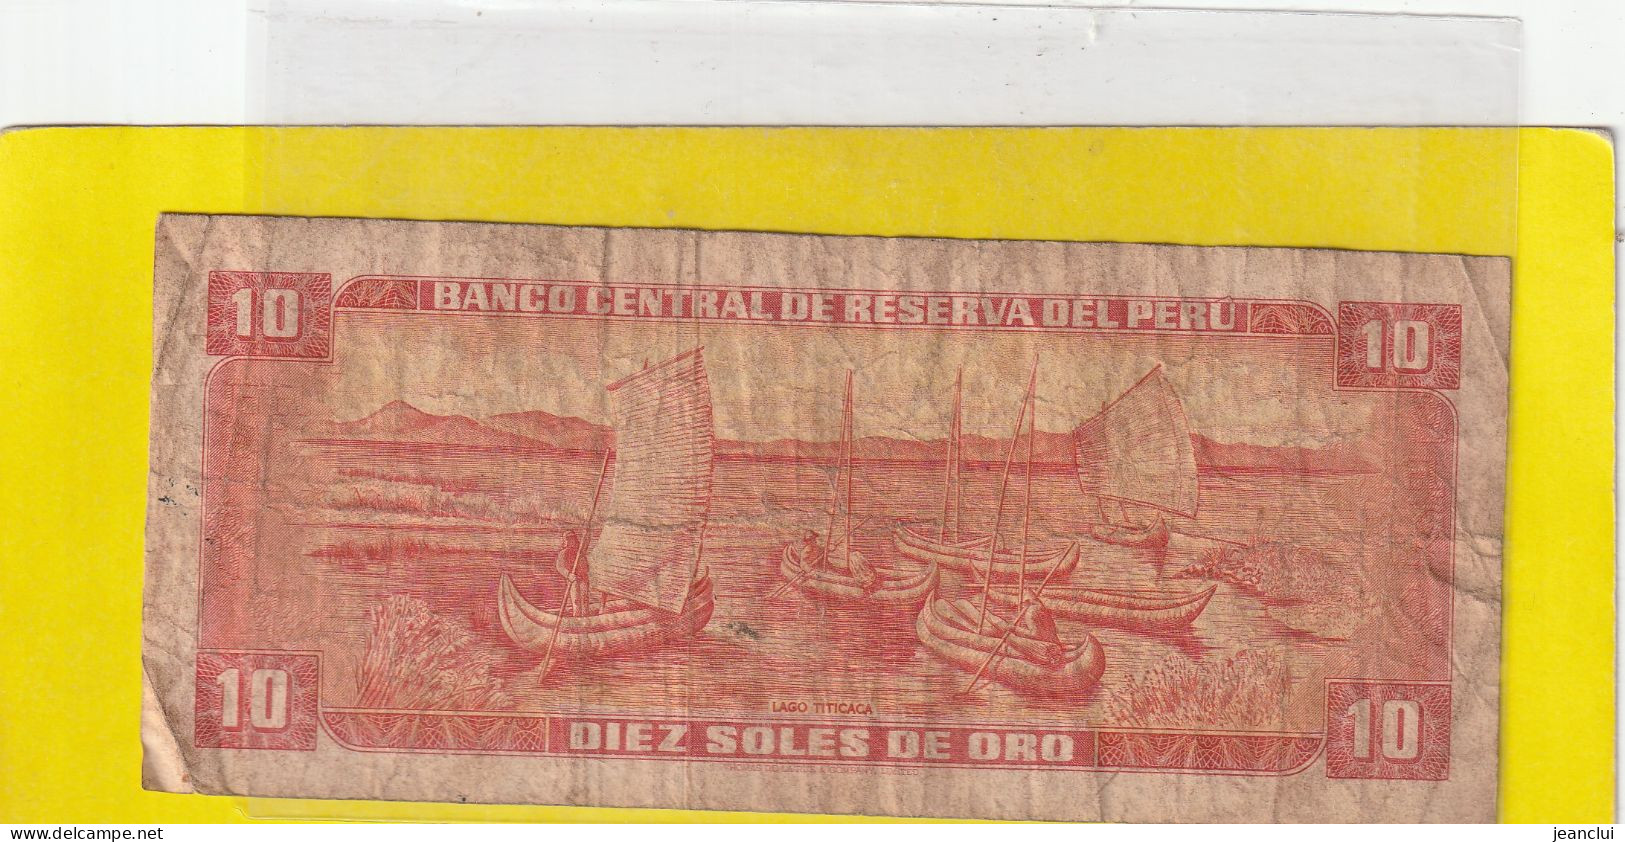 BANCO CENTRAL DE RESERVA DEL PERU .  10 SOLES DE ORO  .  24 DE MAYO DE 1973  . N°  I 343080 .  2 SCANNES  .  ETAT USITE - Pérou